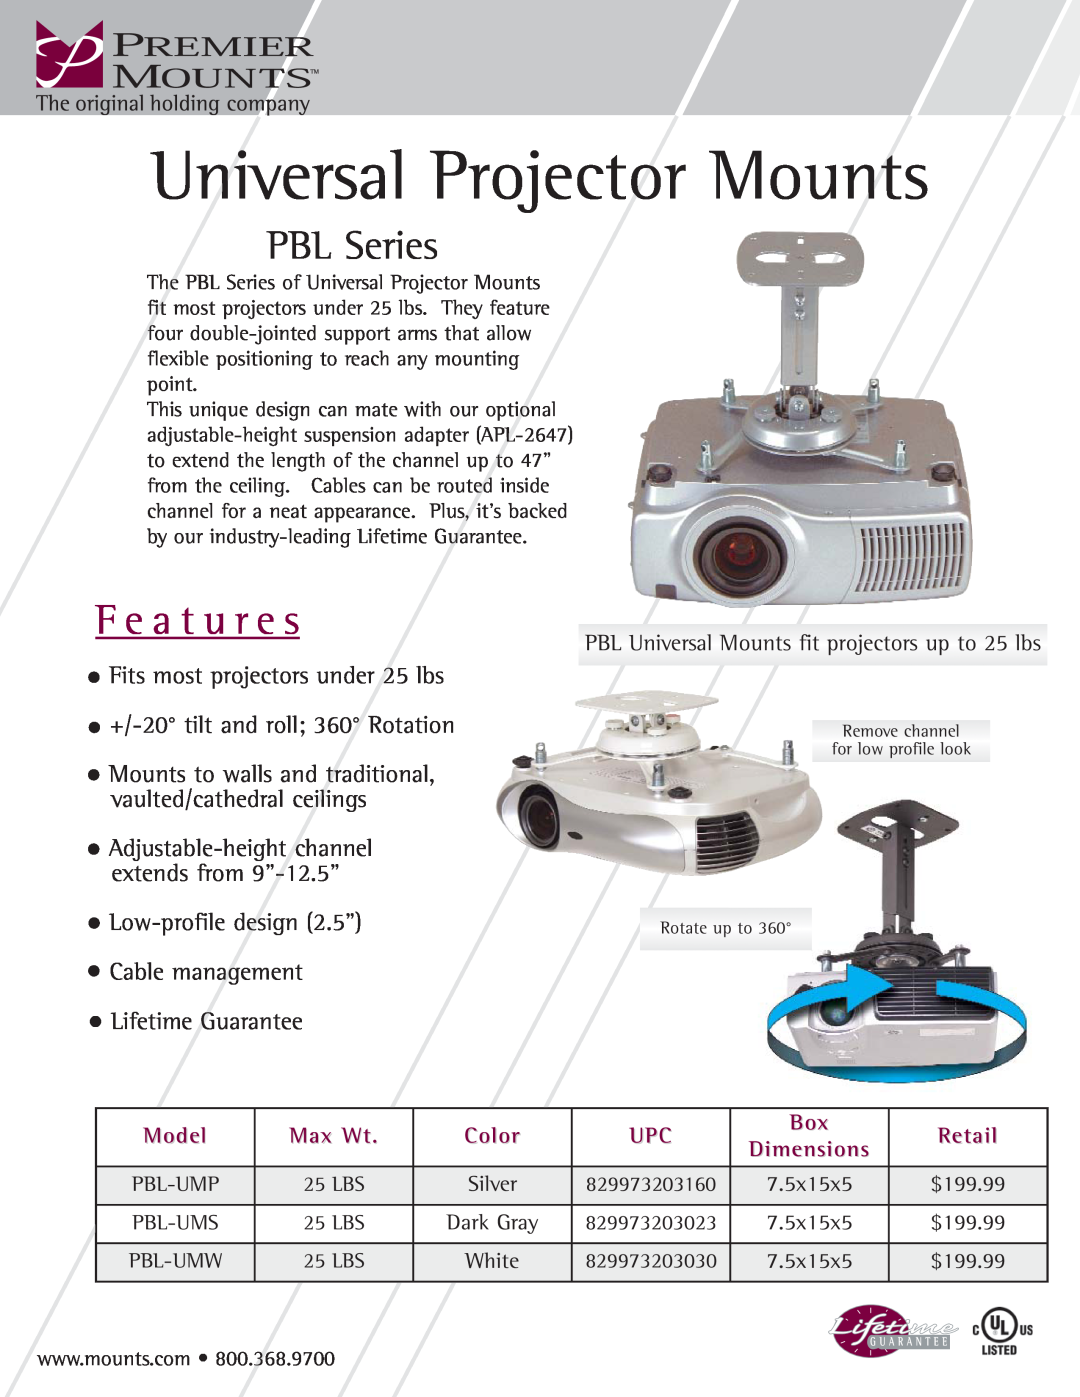 Premier Mounts PBL-UMW manual White, Universal Projector Mounts, F e a t u r e s, PBL Series, Lifetime Guarantee, Model 